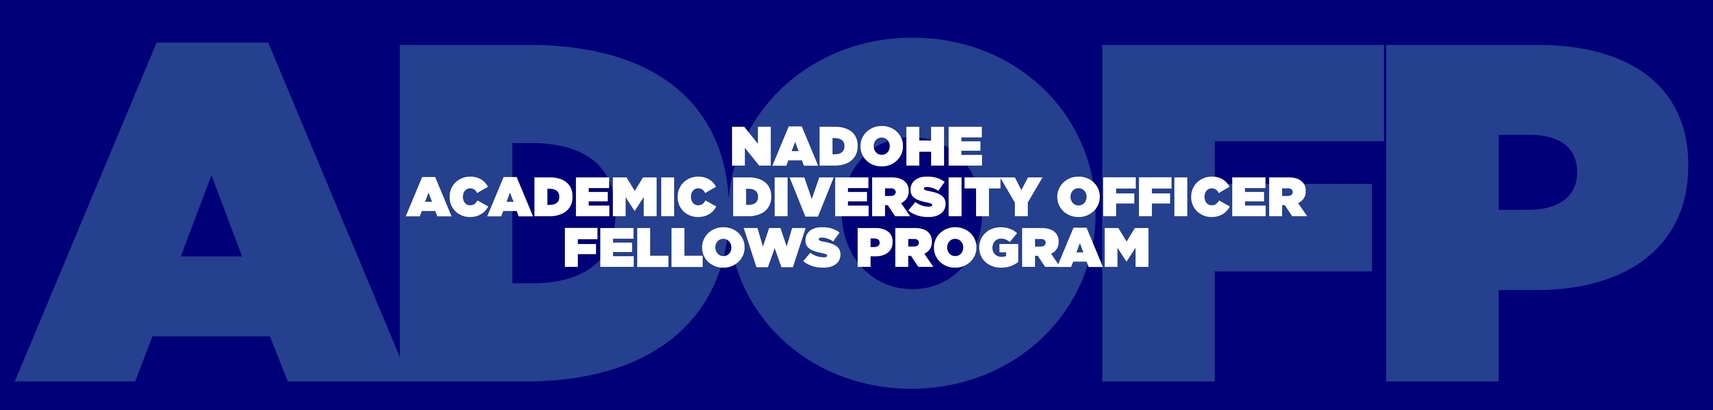 Academic Diversity Officer Fellows Program 